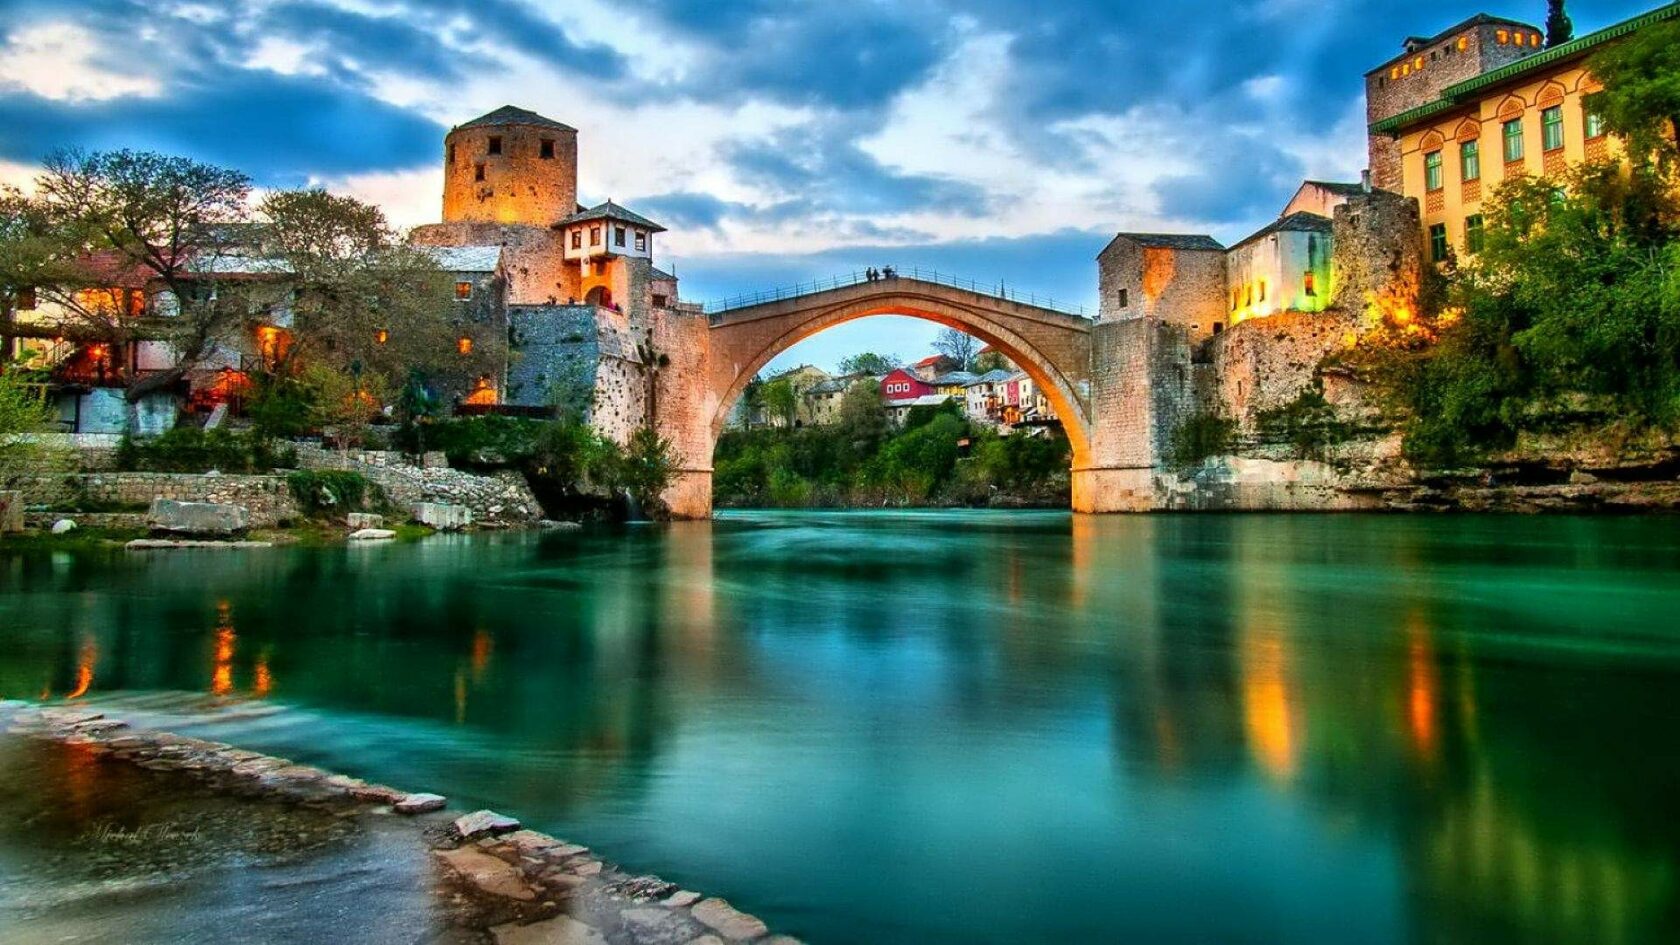 Босния и Герцеговина - Безумно красивая и самая интригующая страна на Балка...